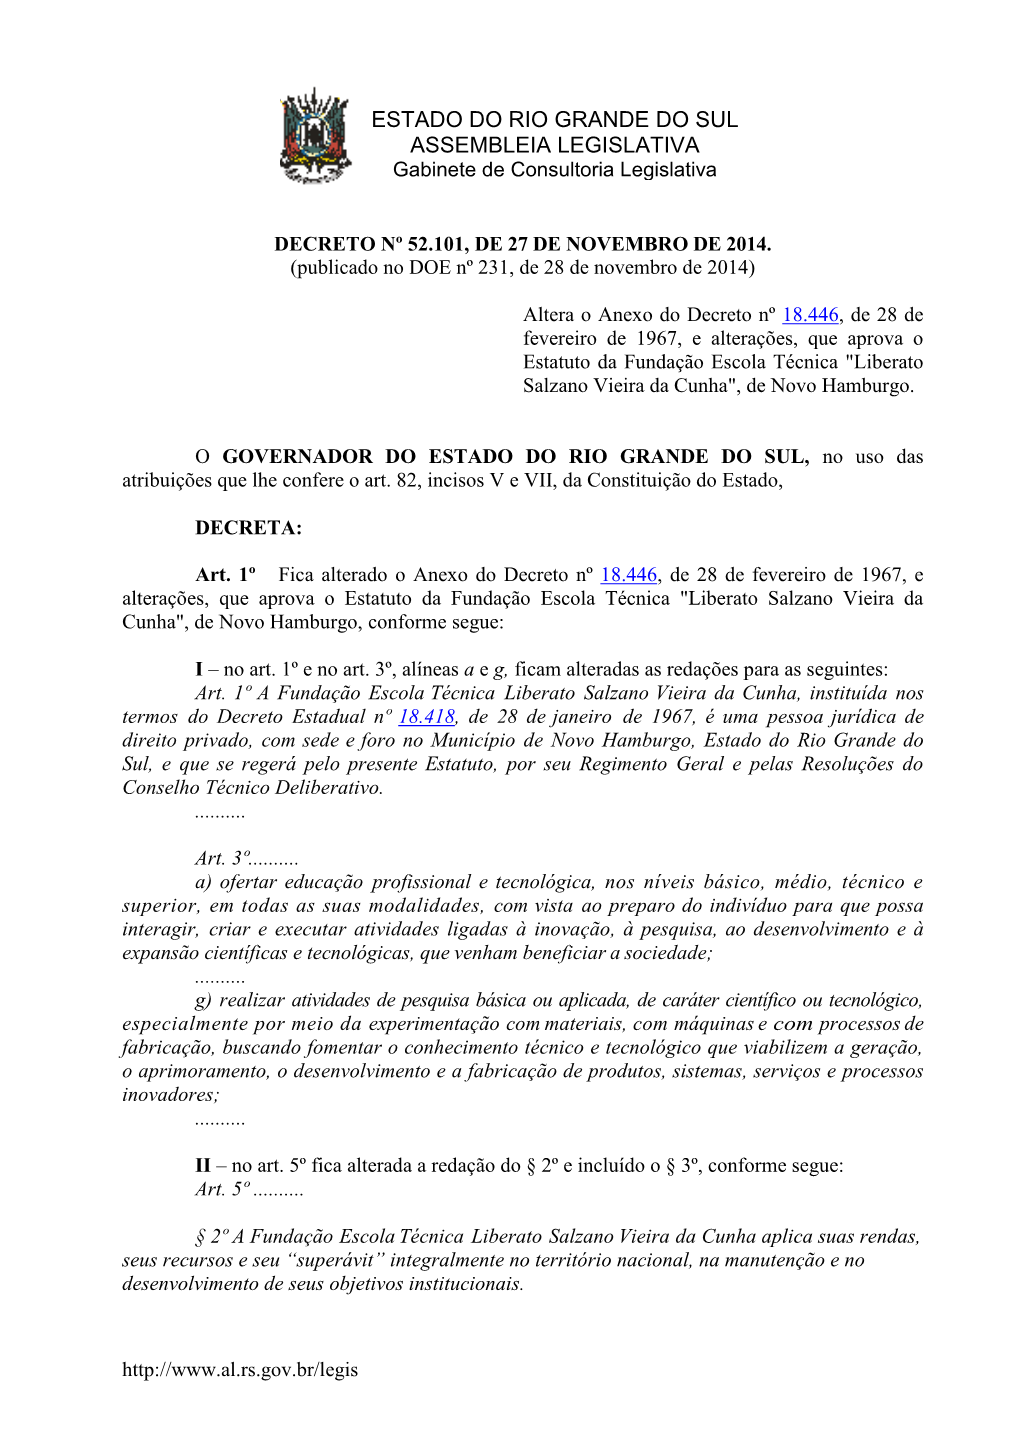 ESTADO DO RIO GRANDE DO SUL ASSEMBLEIA LEGISLATIVA Gabinete De Consultoria Legislativa